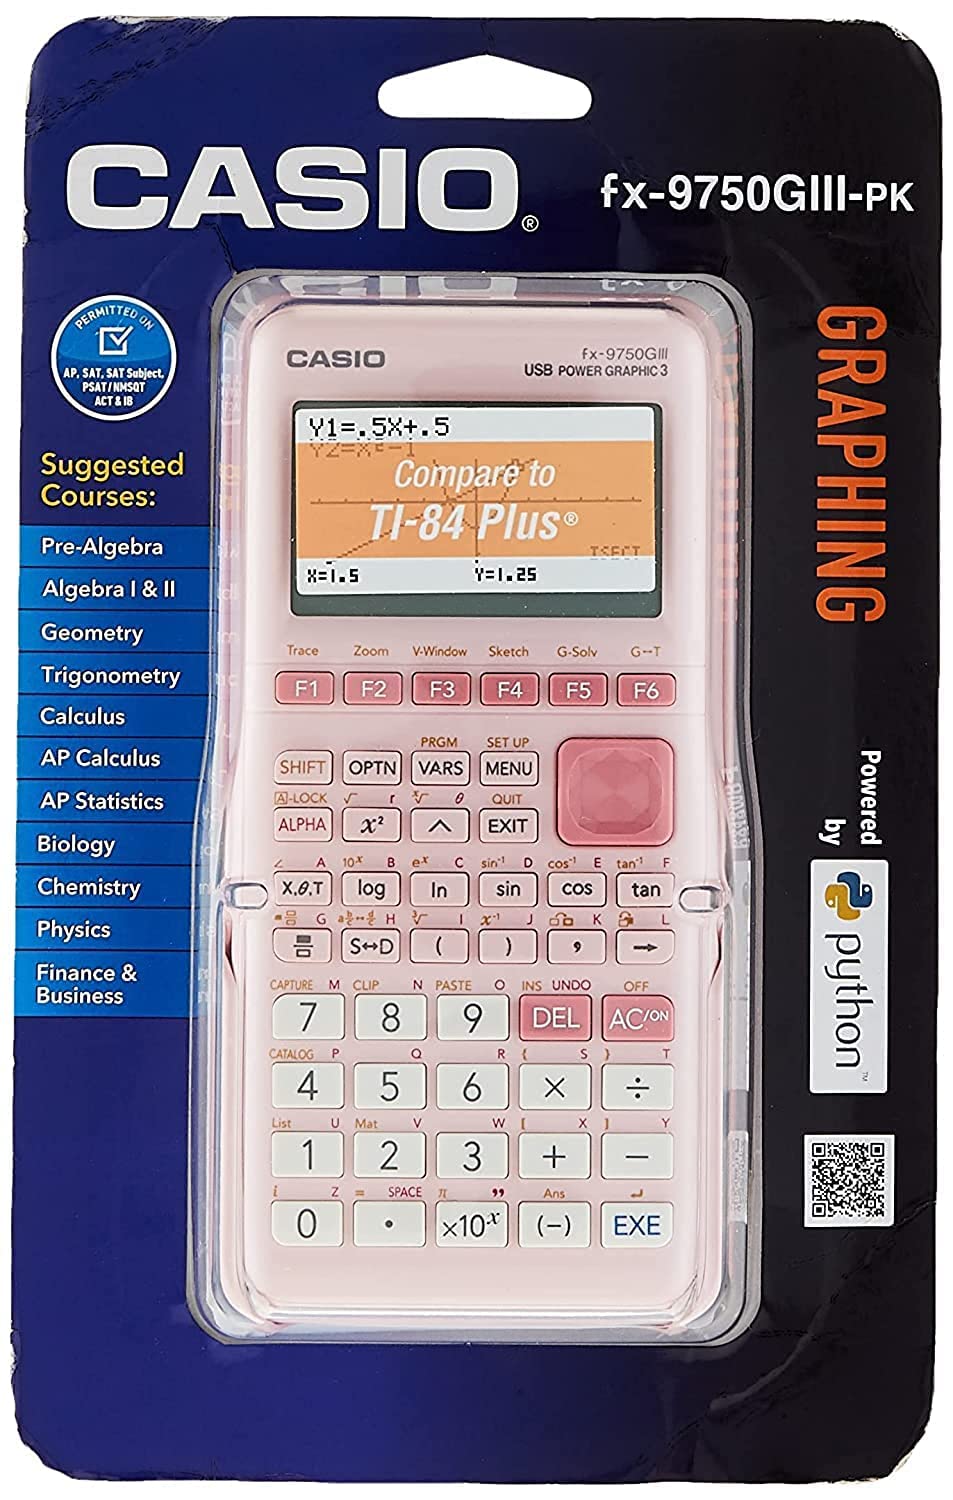  [AUSTRALIA] - Casio fx-9750GIII Pink Graphing Calculator (fx-9750GIII-PK)